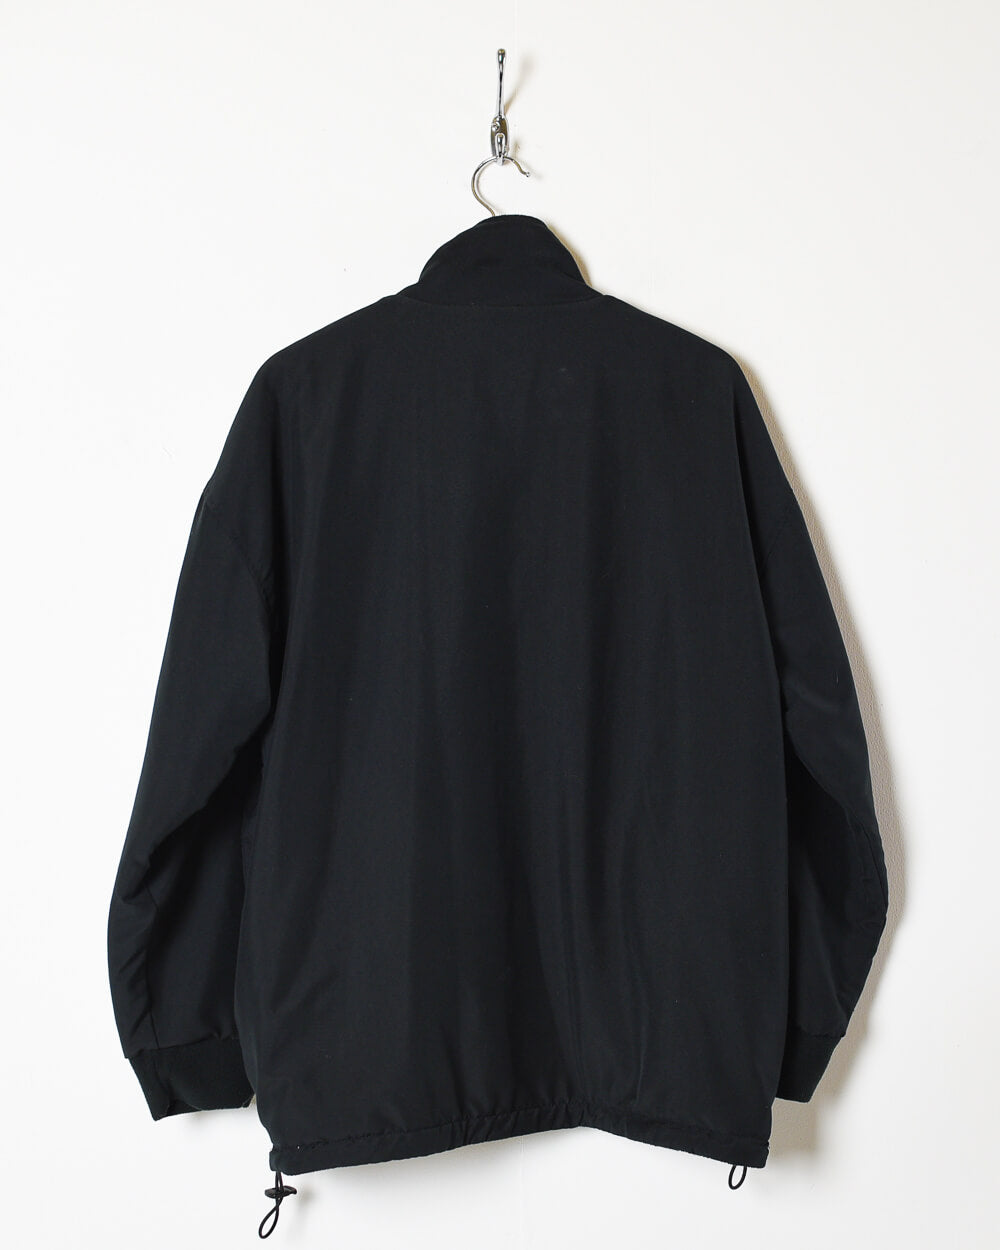 Black Guinness 1759 Reversible Fleece Jacket - Large